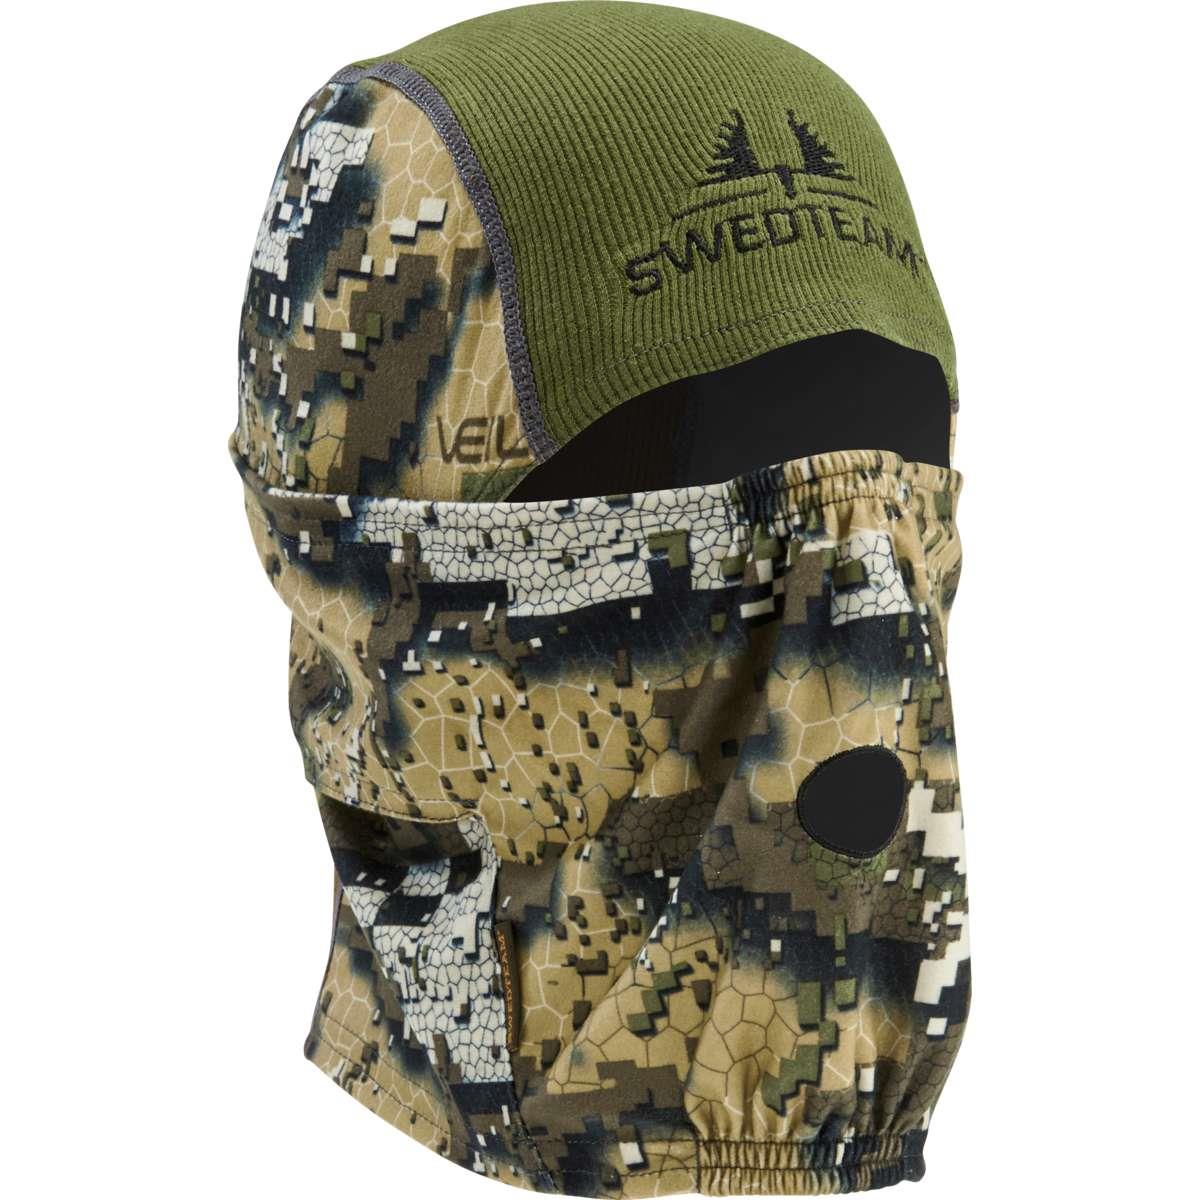 Swedteam Ridge Camouflage hood